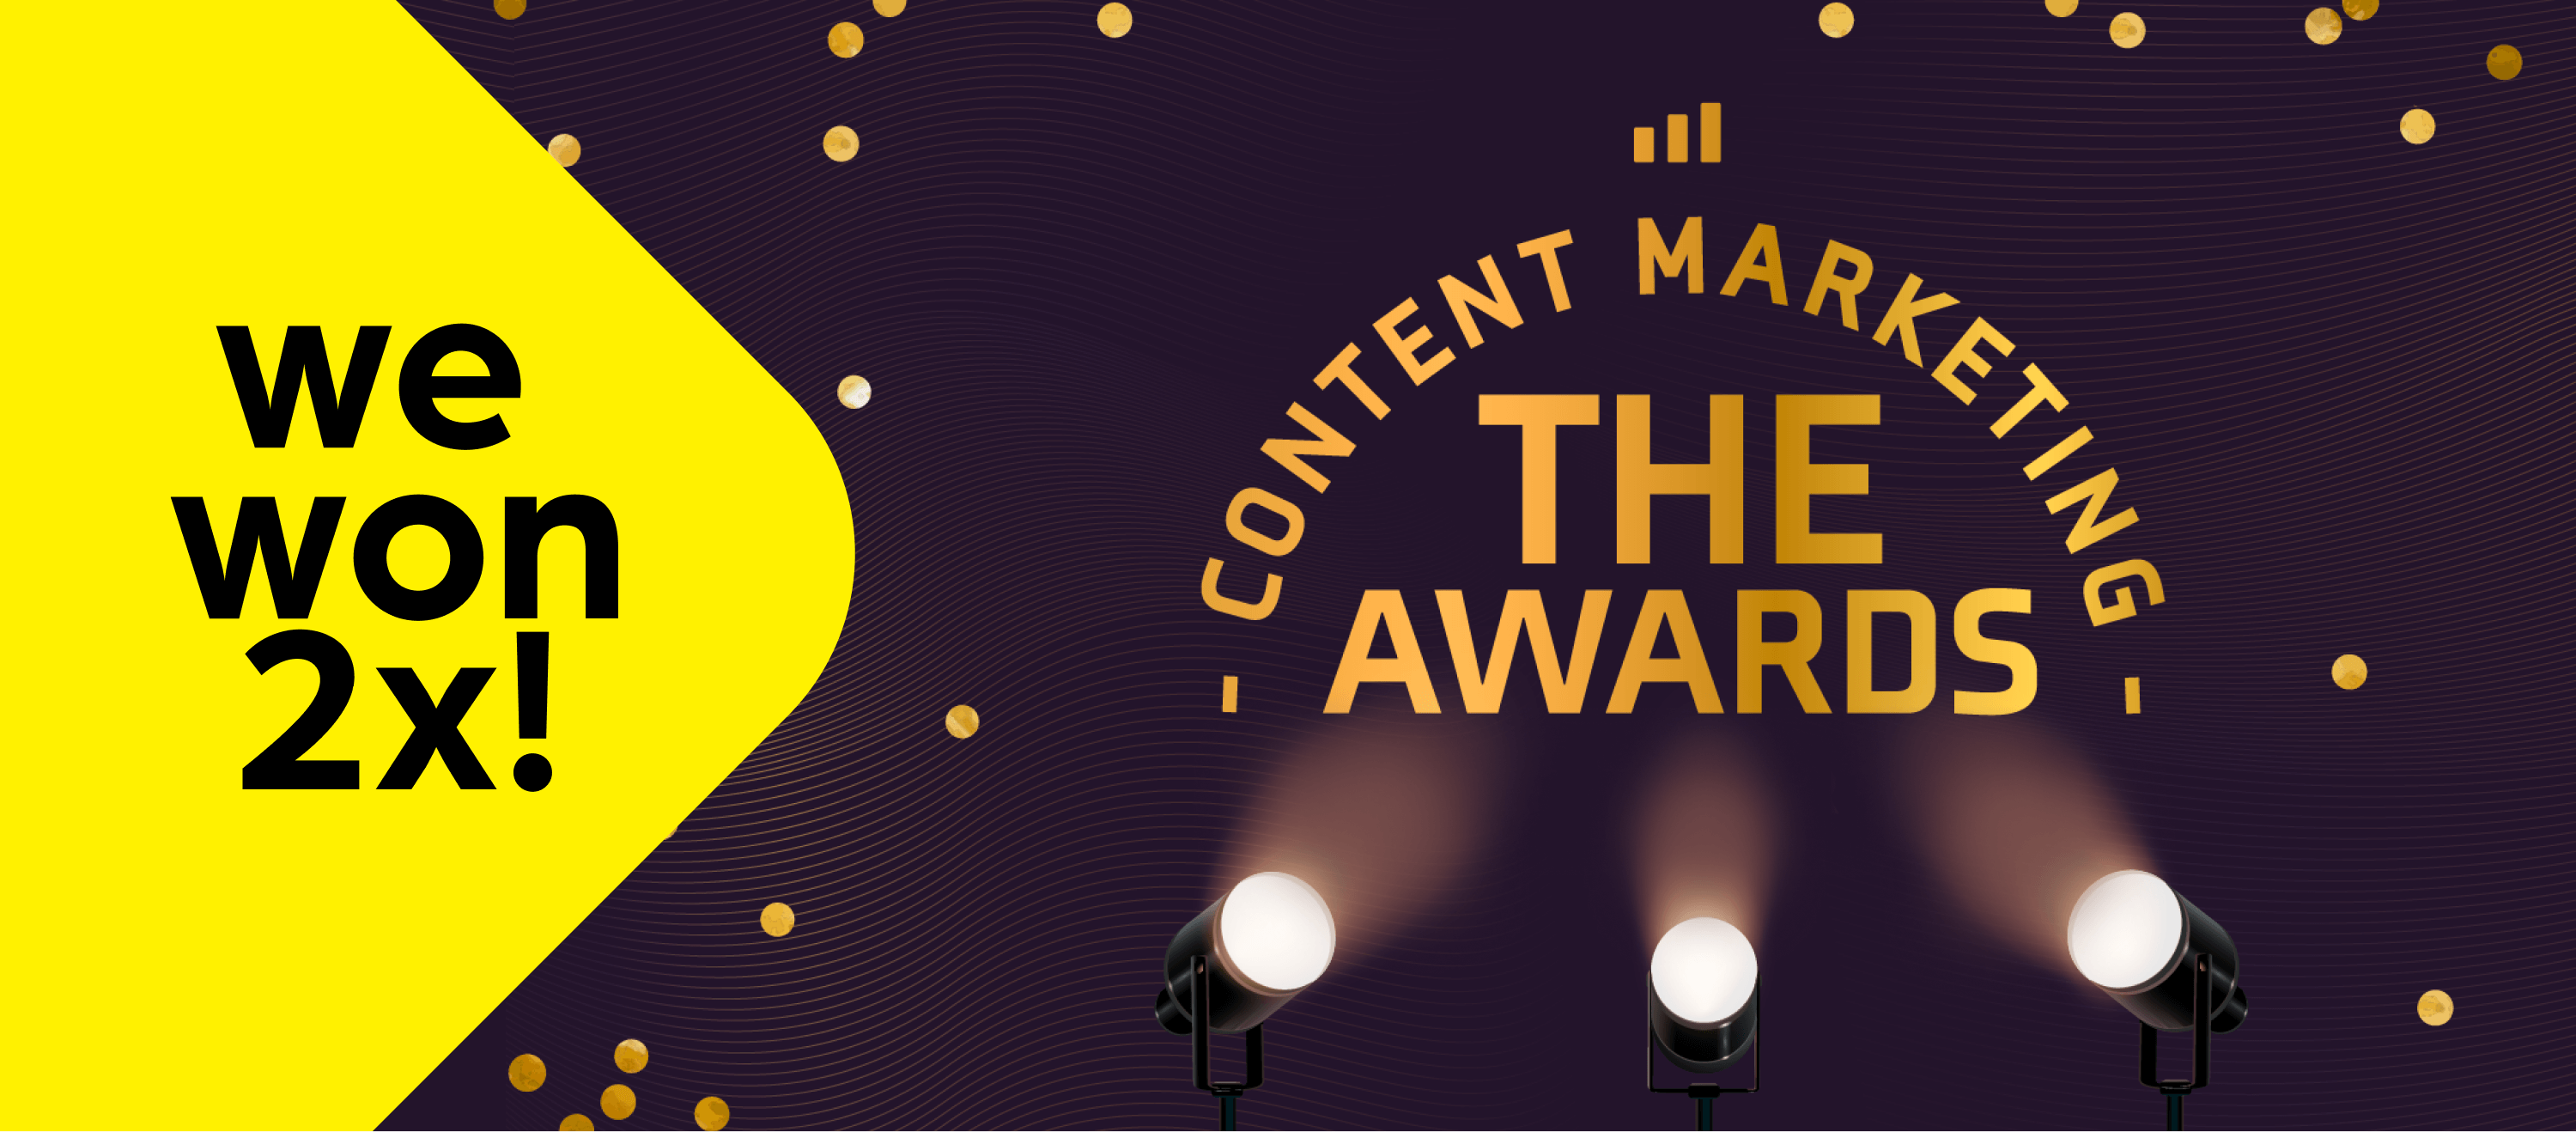 We won 2x: Content Marketing The Awards